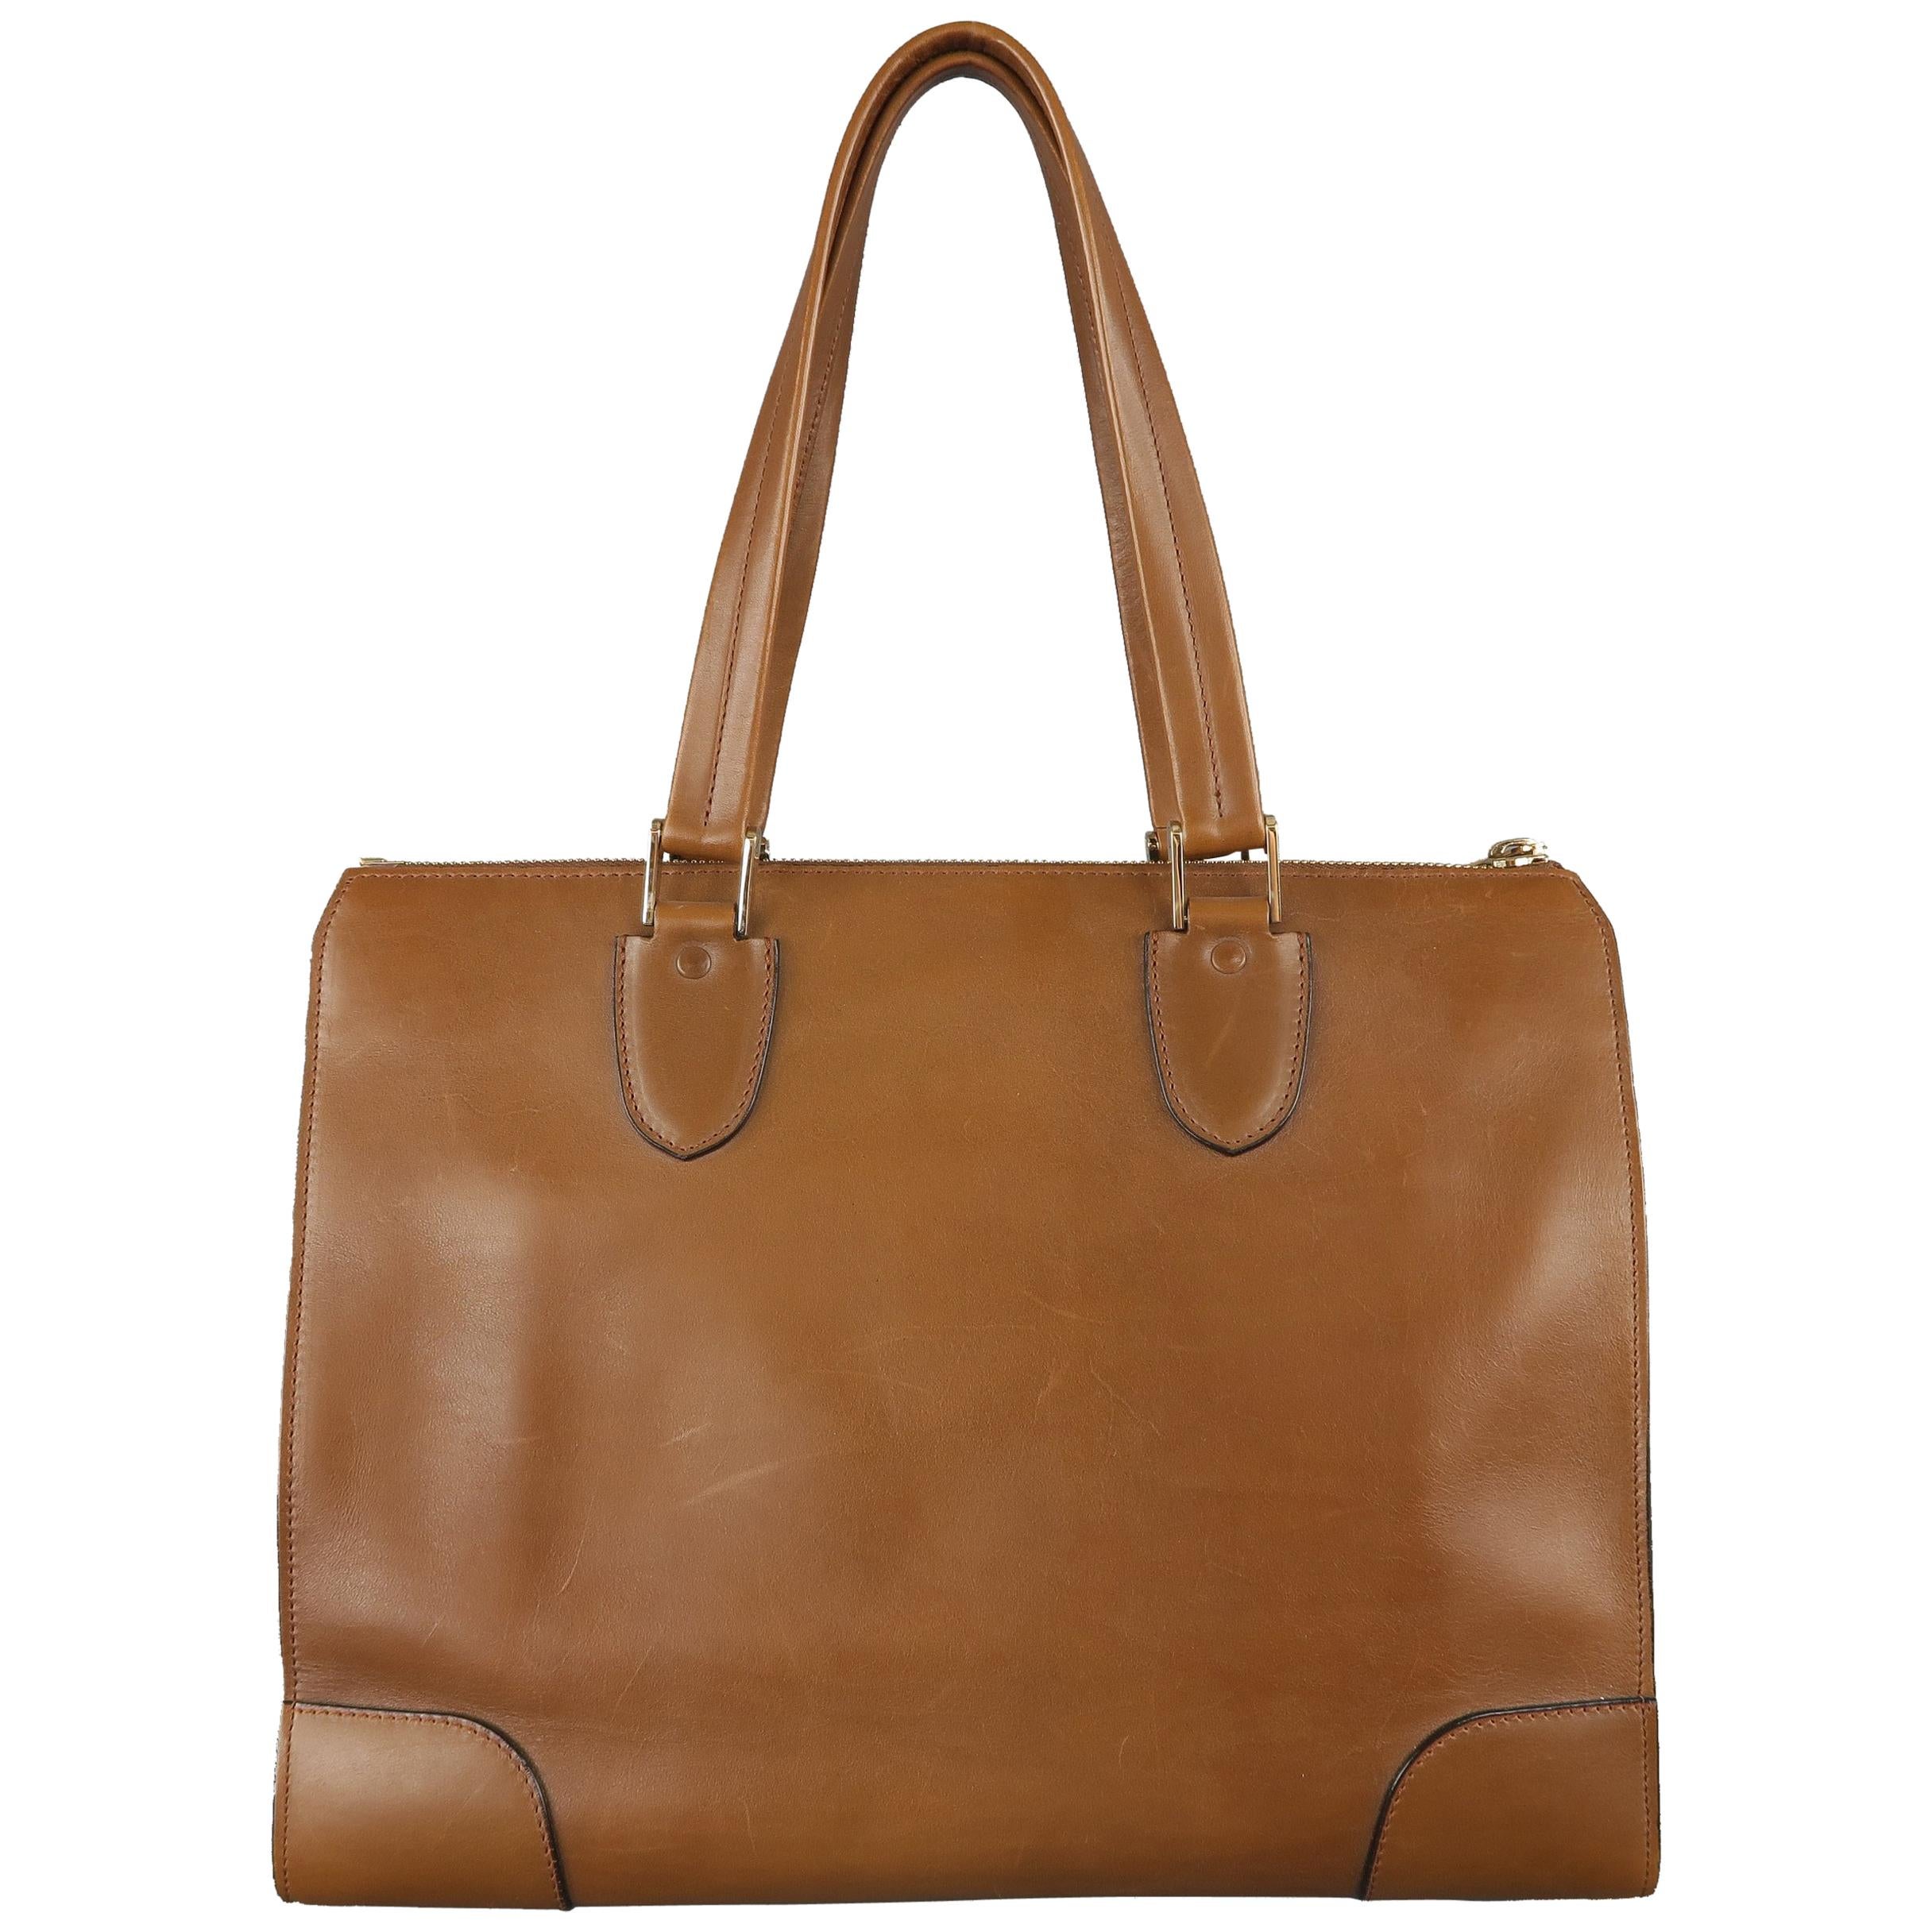 Hot Pink shopping bag in leather 11.8x5.9x13.7 inc - Babila - Made in Italy  : Amazon.co.uk: Fashion